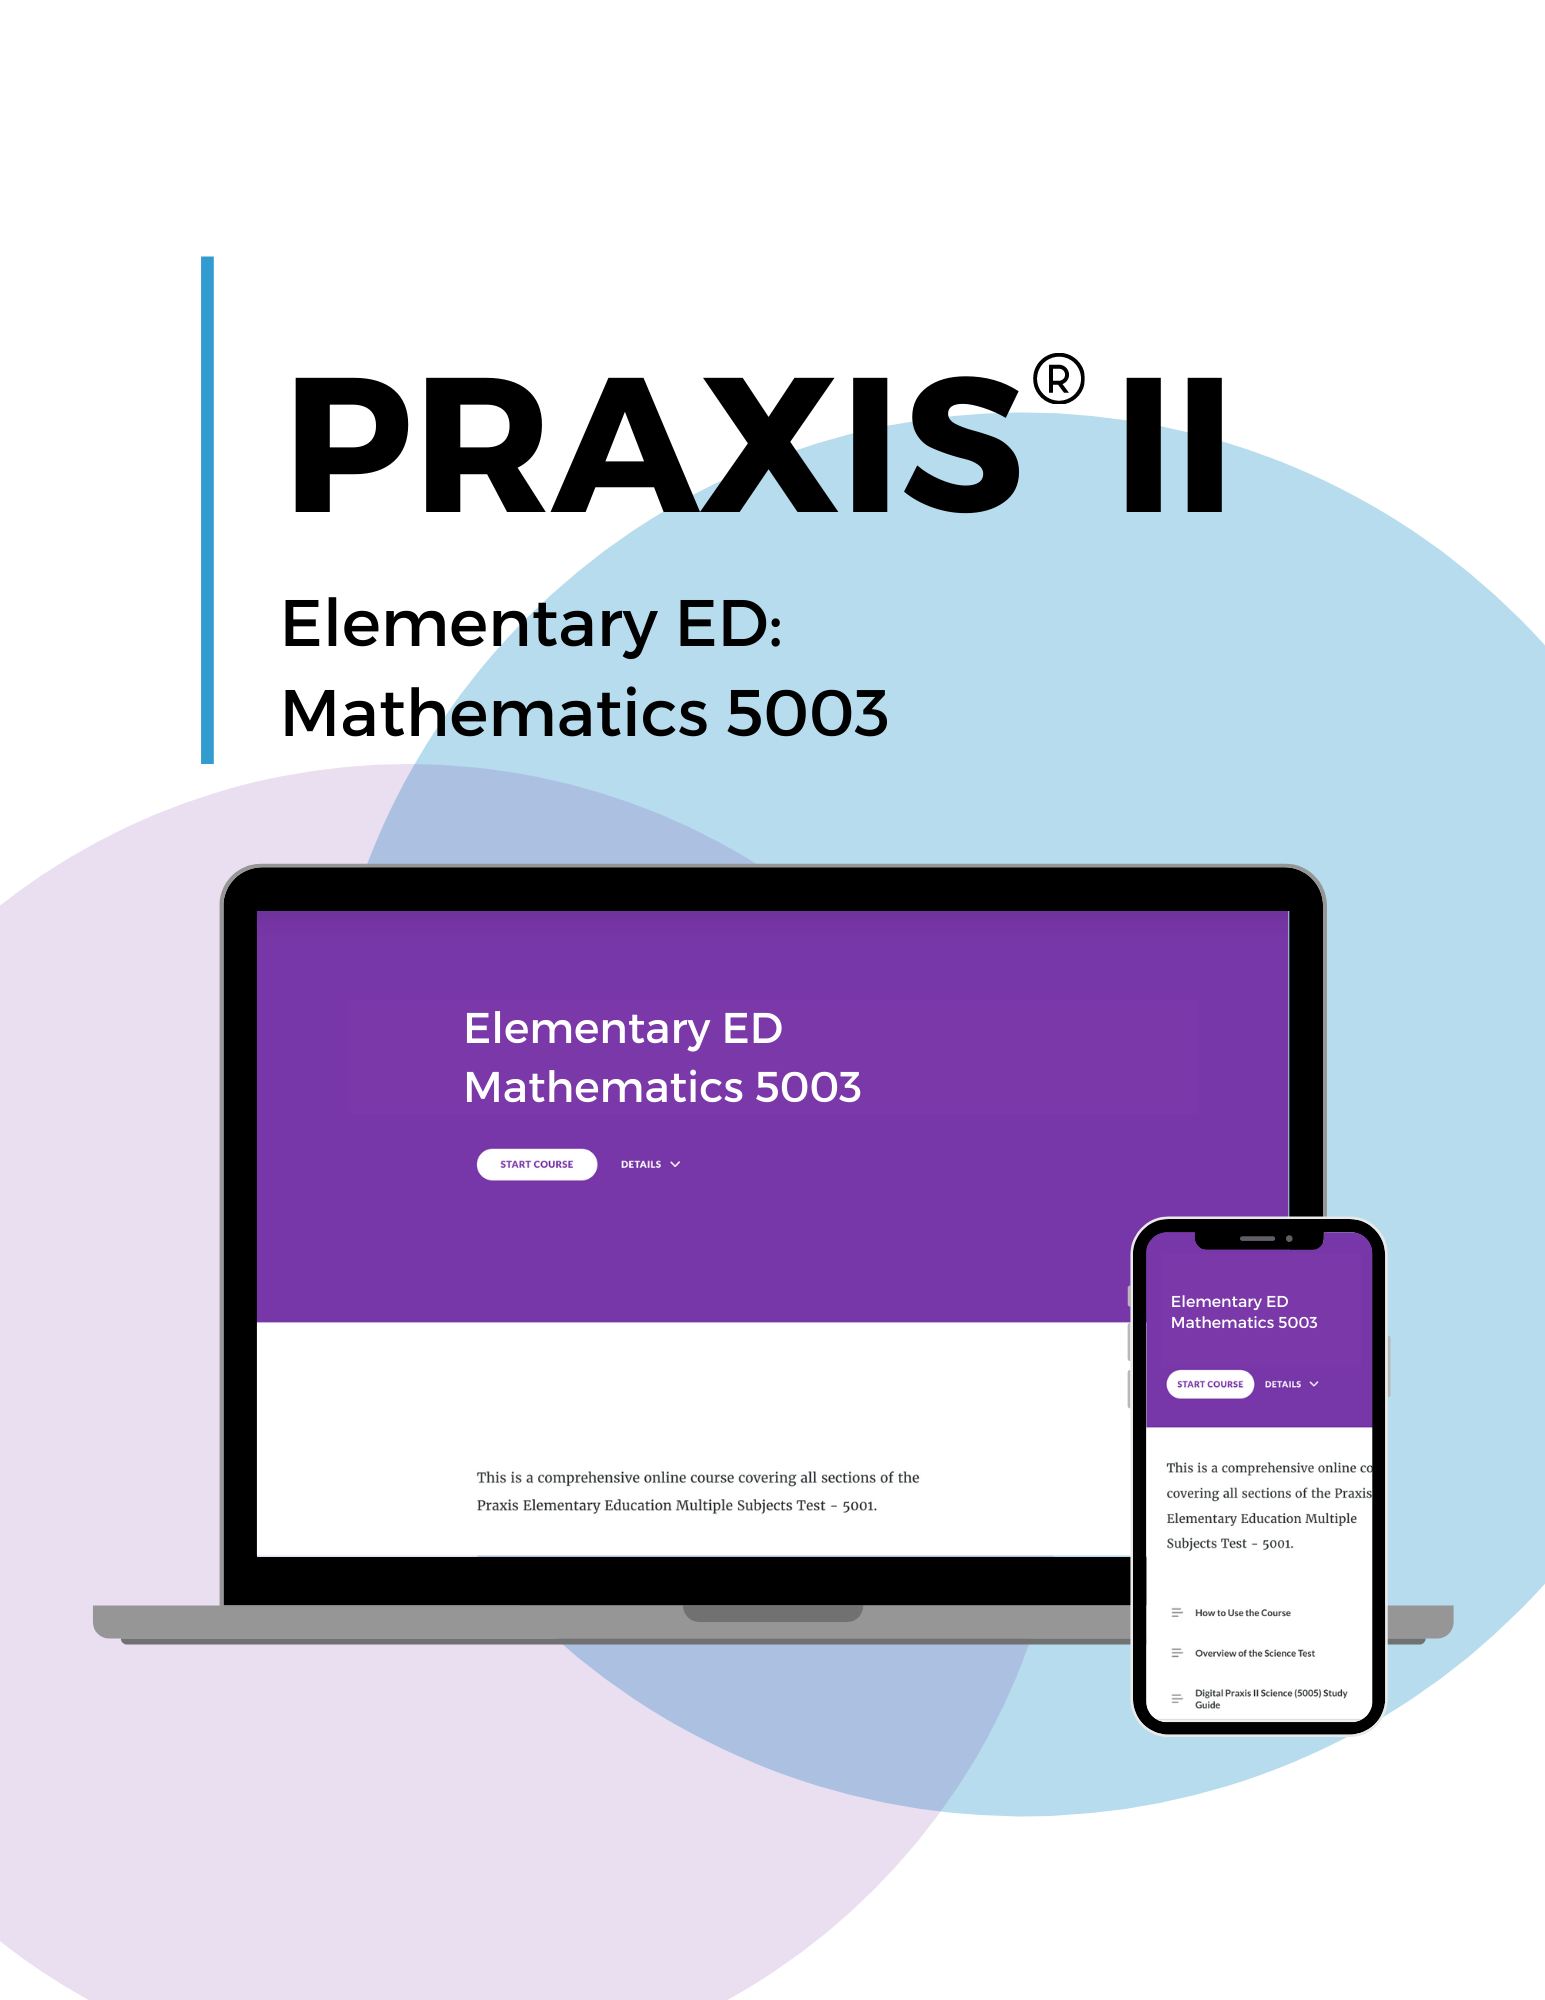 Praxis II Elementary ED: Mathematics 5003